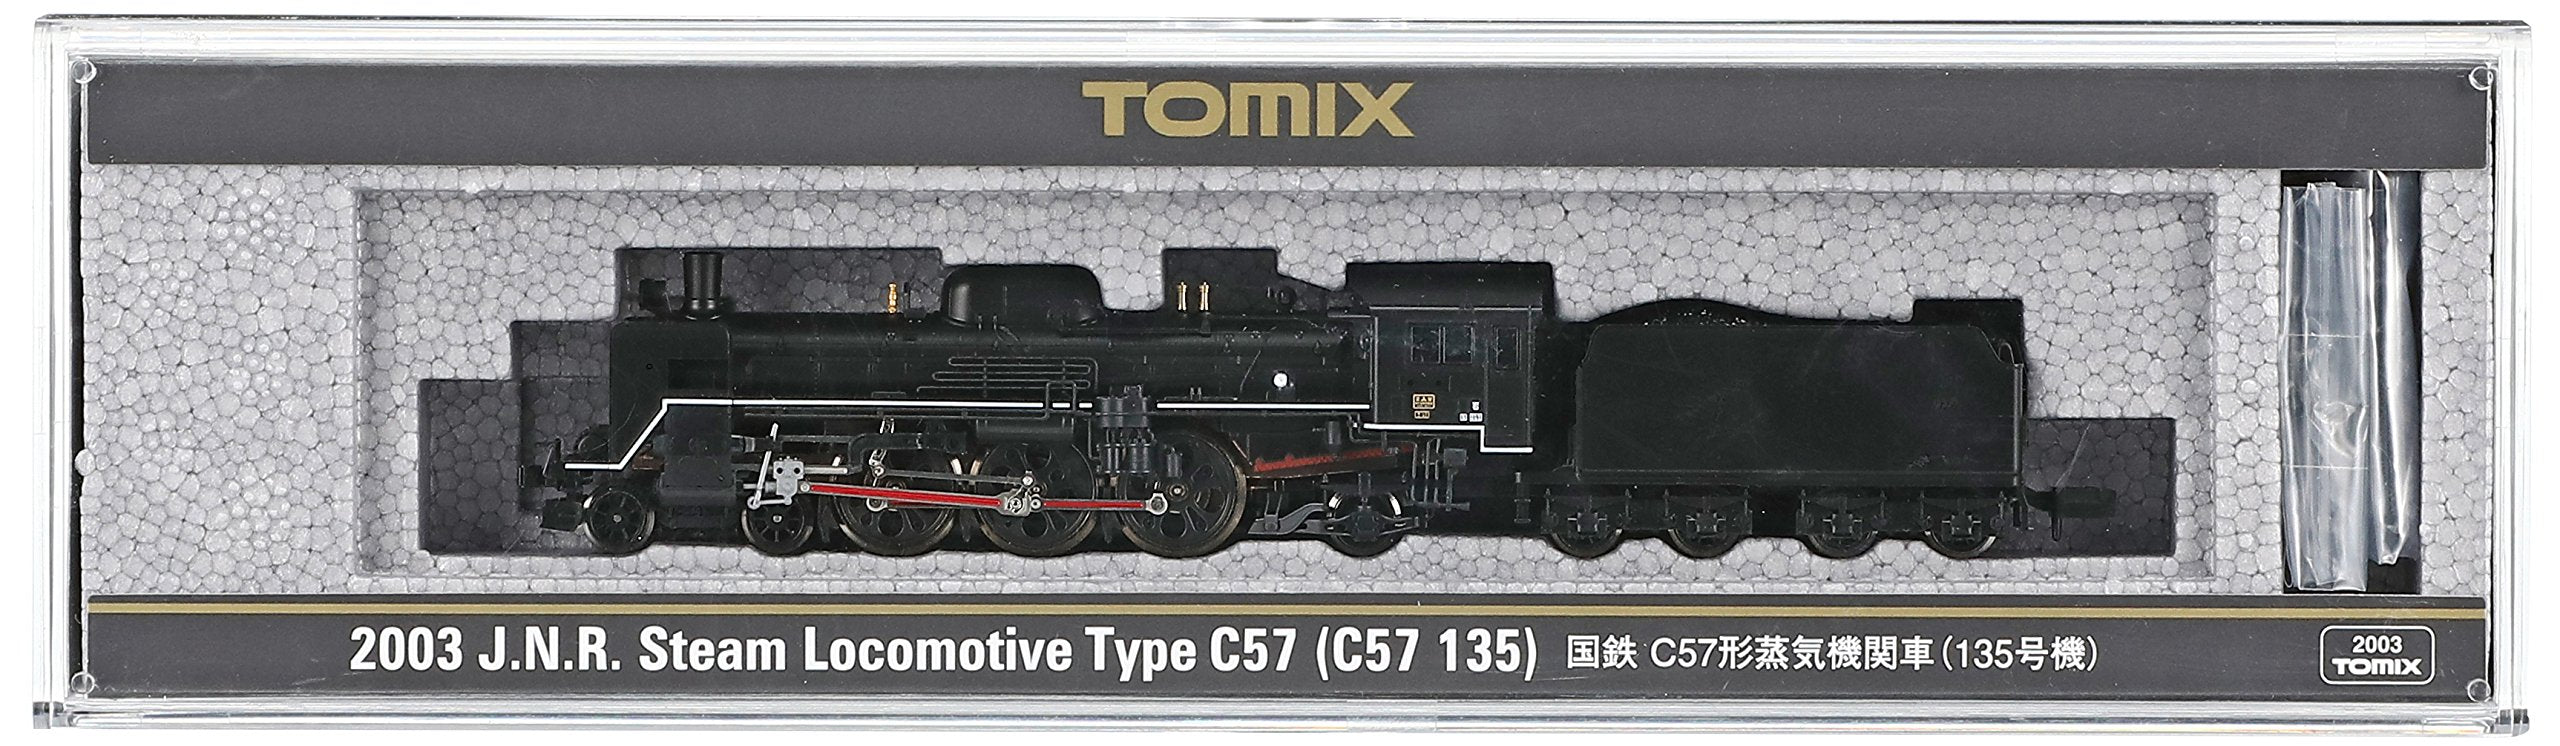 Tomytec Tomix N Gauge C57 Type 135 Steam Locomotive Railway Model 2003